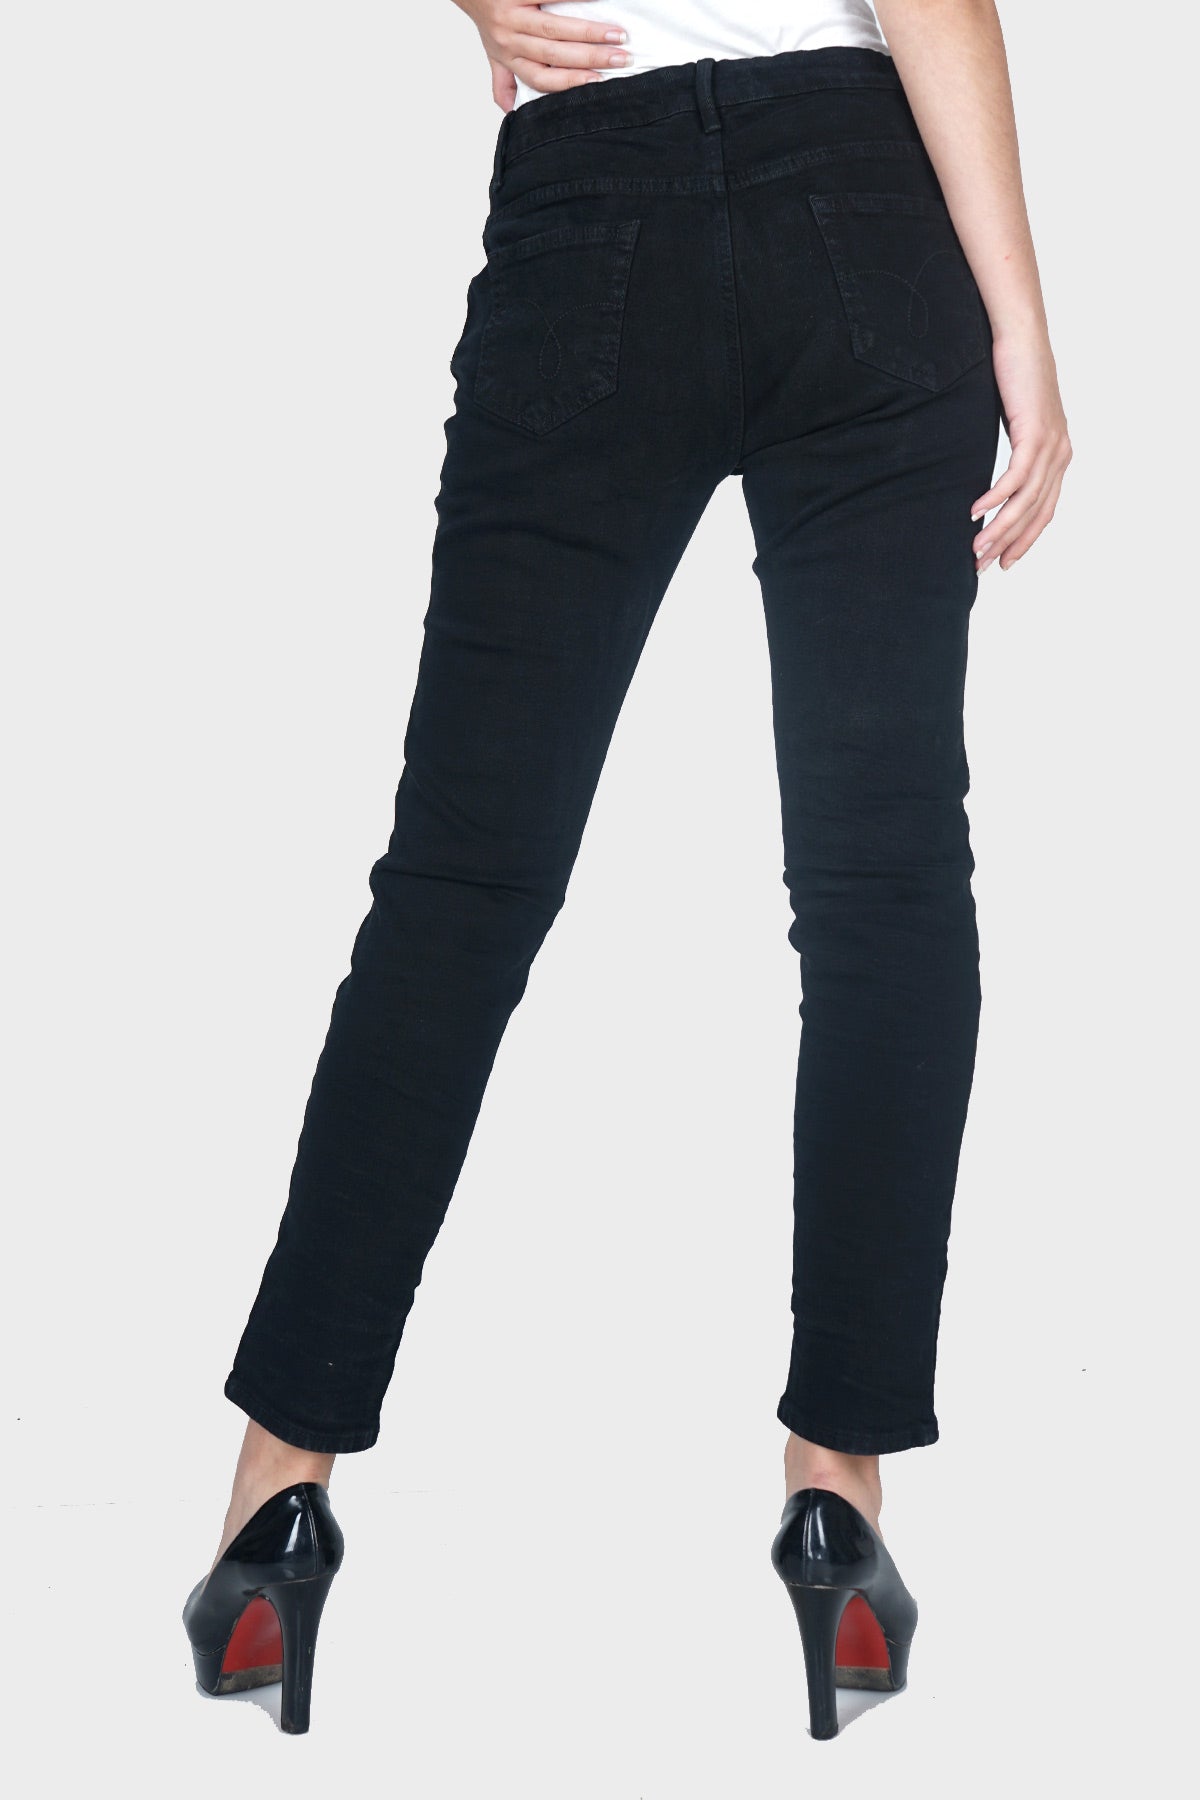 Jeans Skinny 80 Series Black Raw Handmade